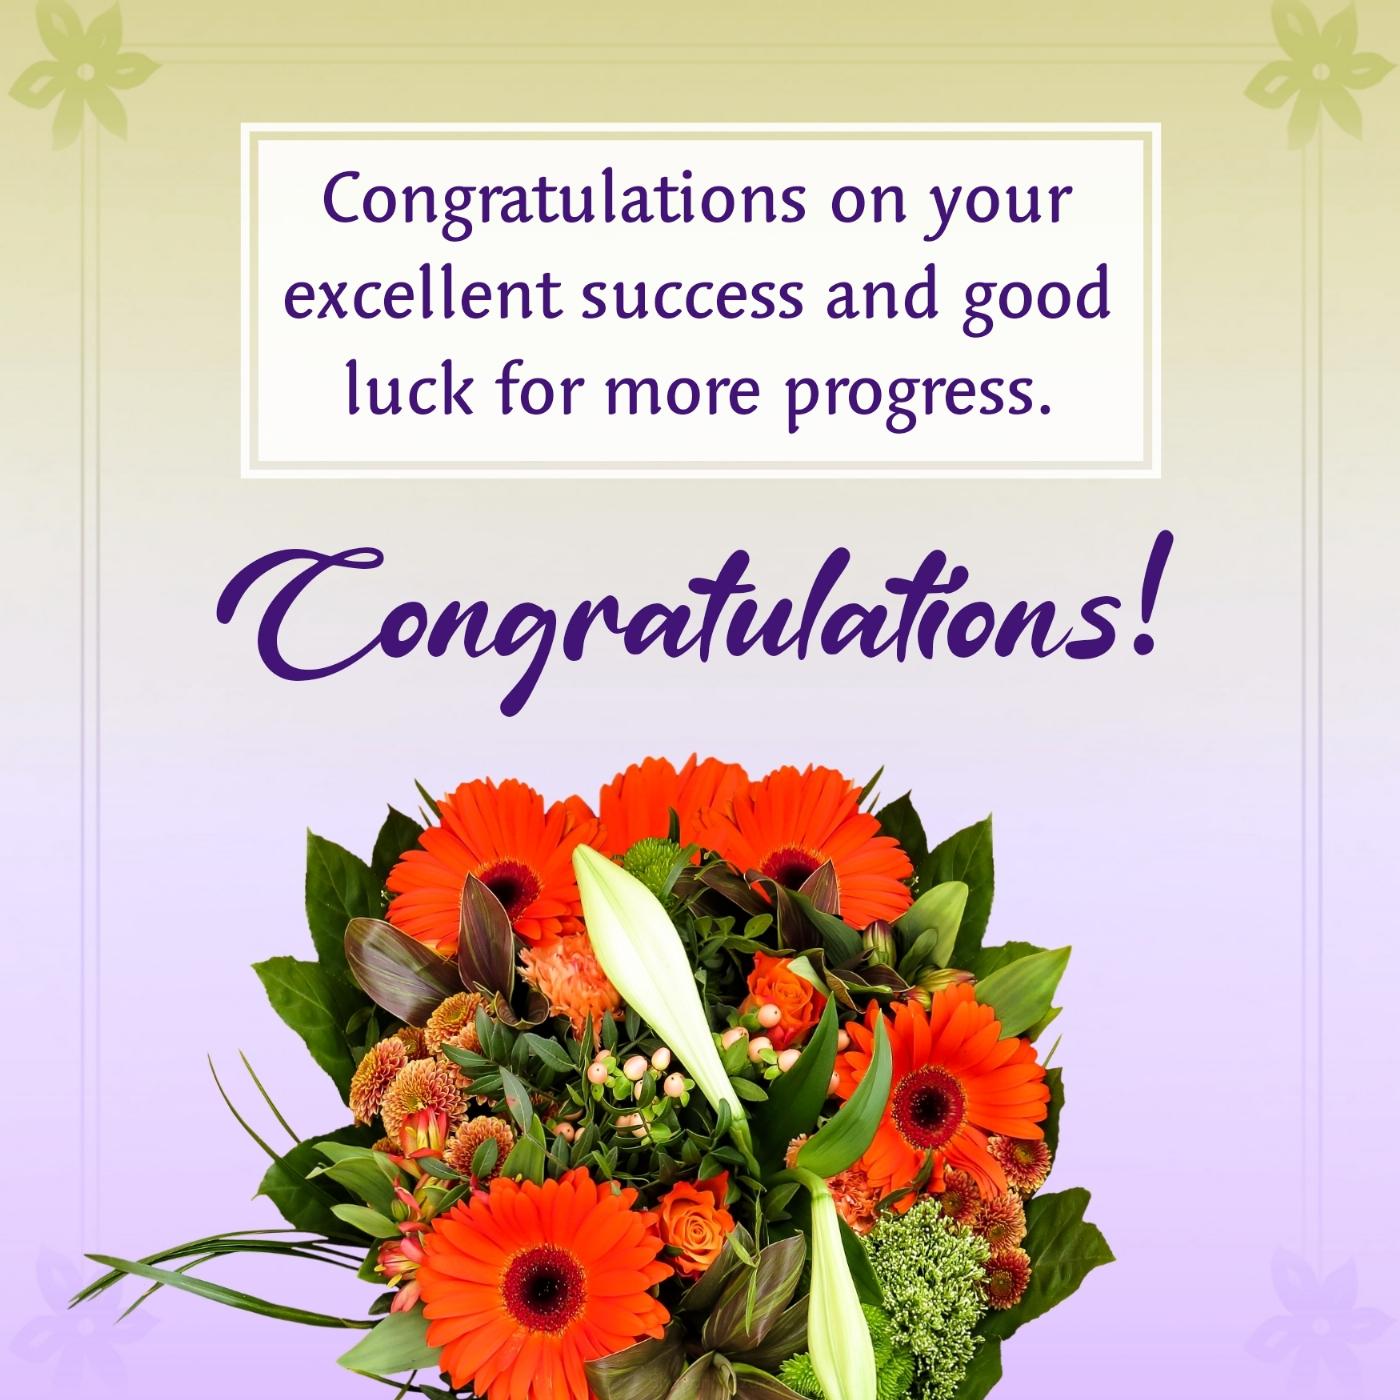 Congratulations on your excellent success